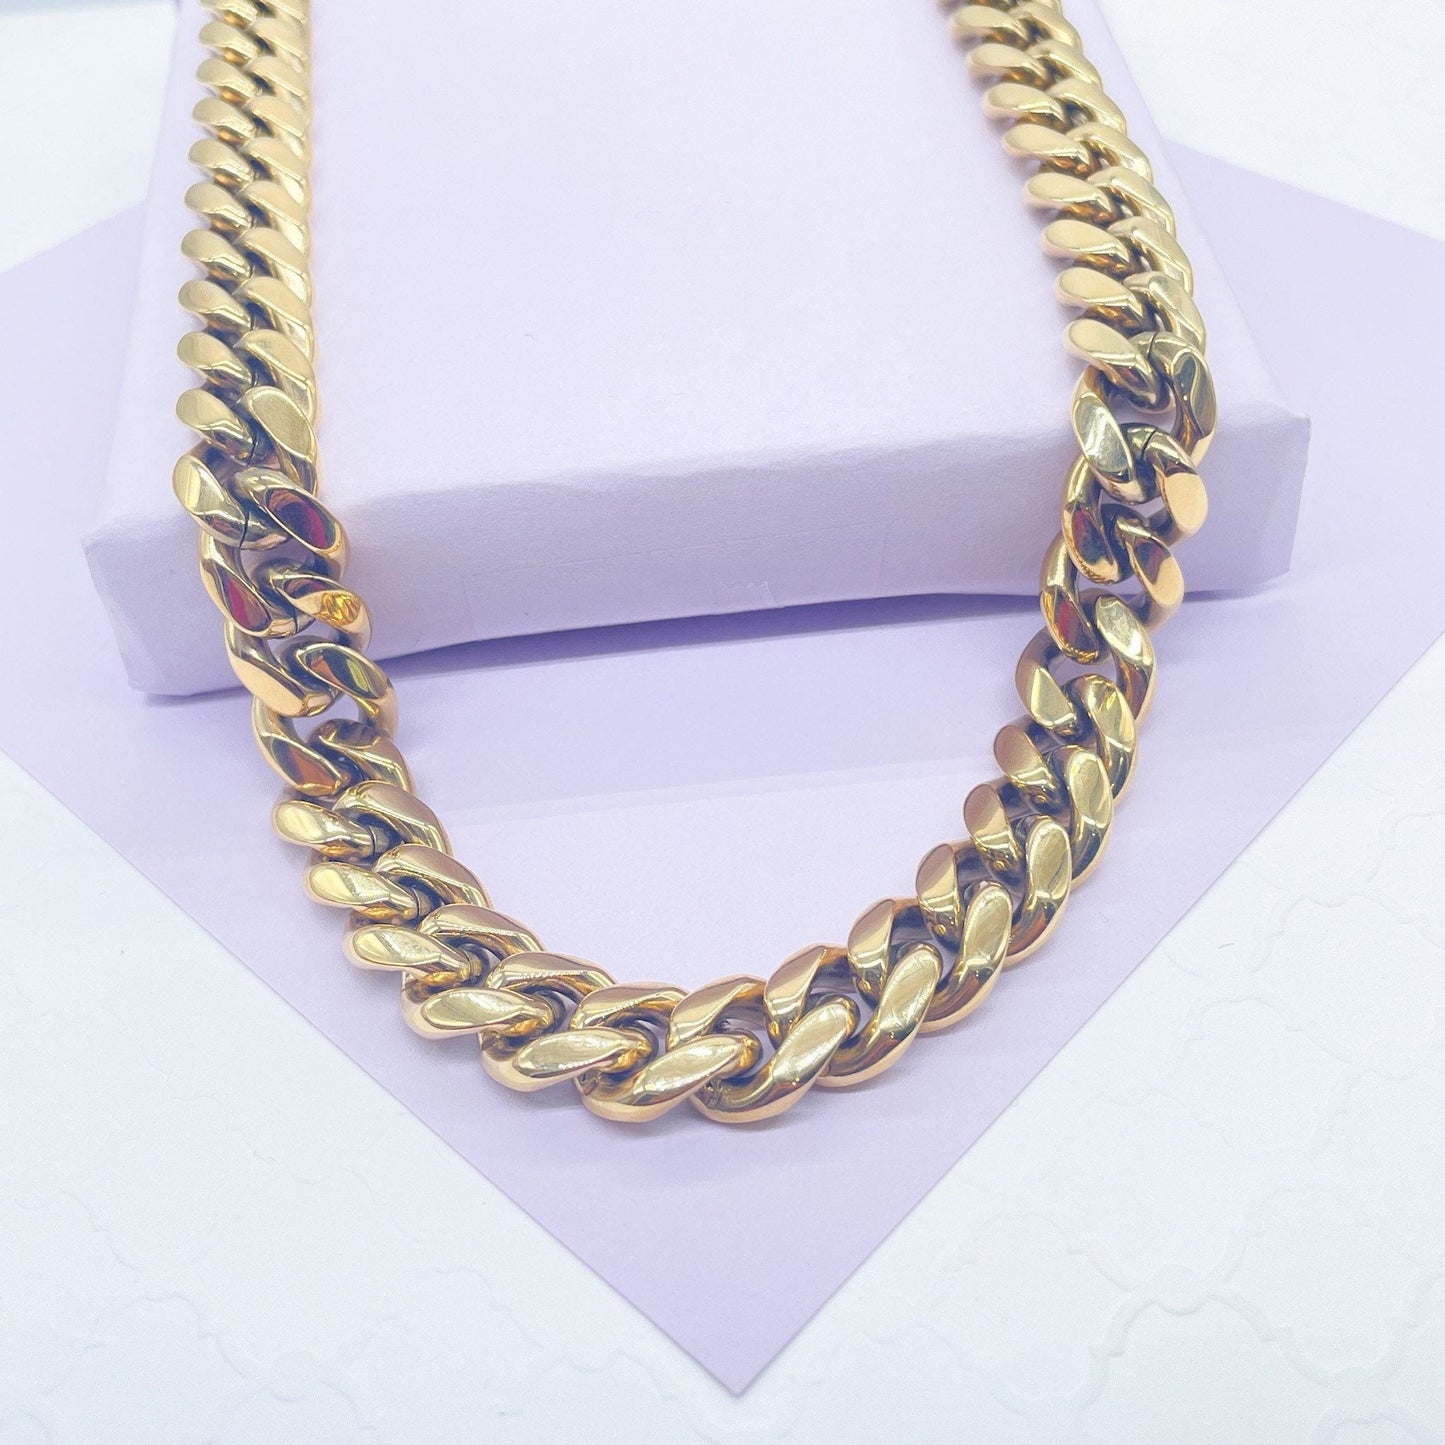 14k Gold Filled Thick 10mm Miami Cuban Link Chain, Cuban Necklace, Cadena de Labon Cubano